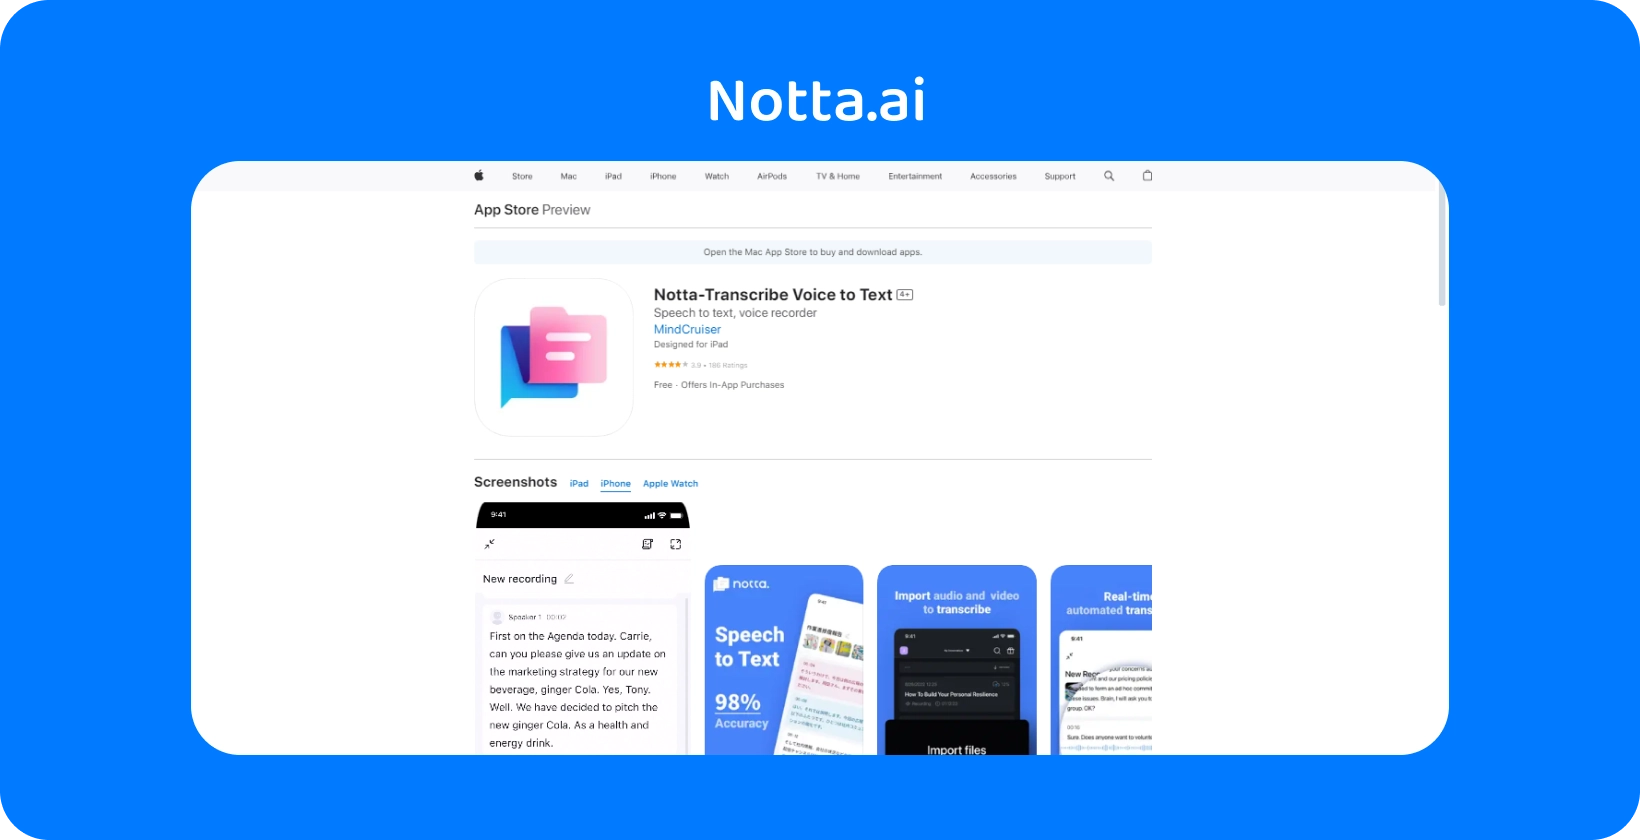 AIの精度で音声をテキストに変換する新機能を備えたNota.aiのApp Storeプレビューが紹介されました。